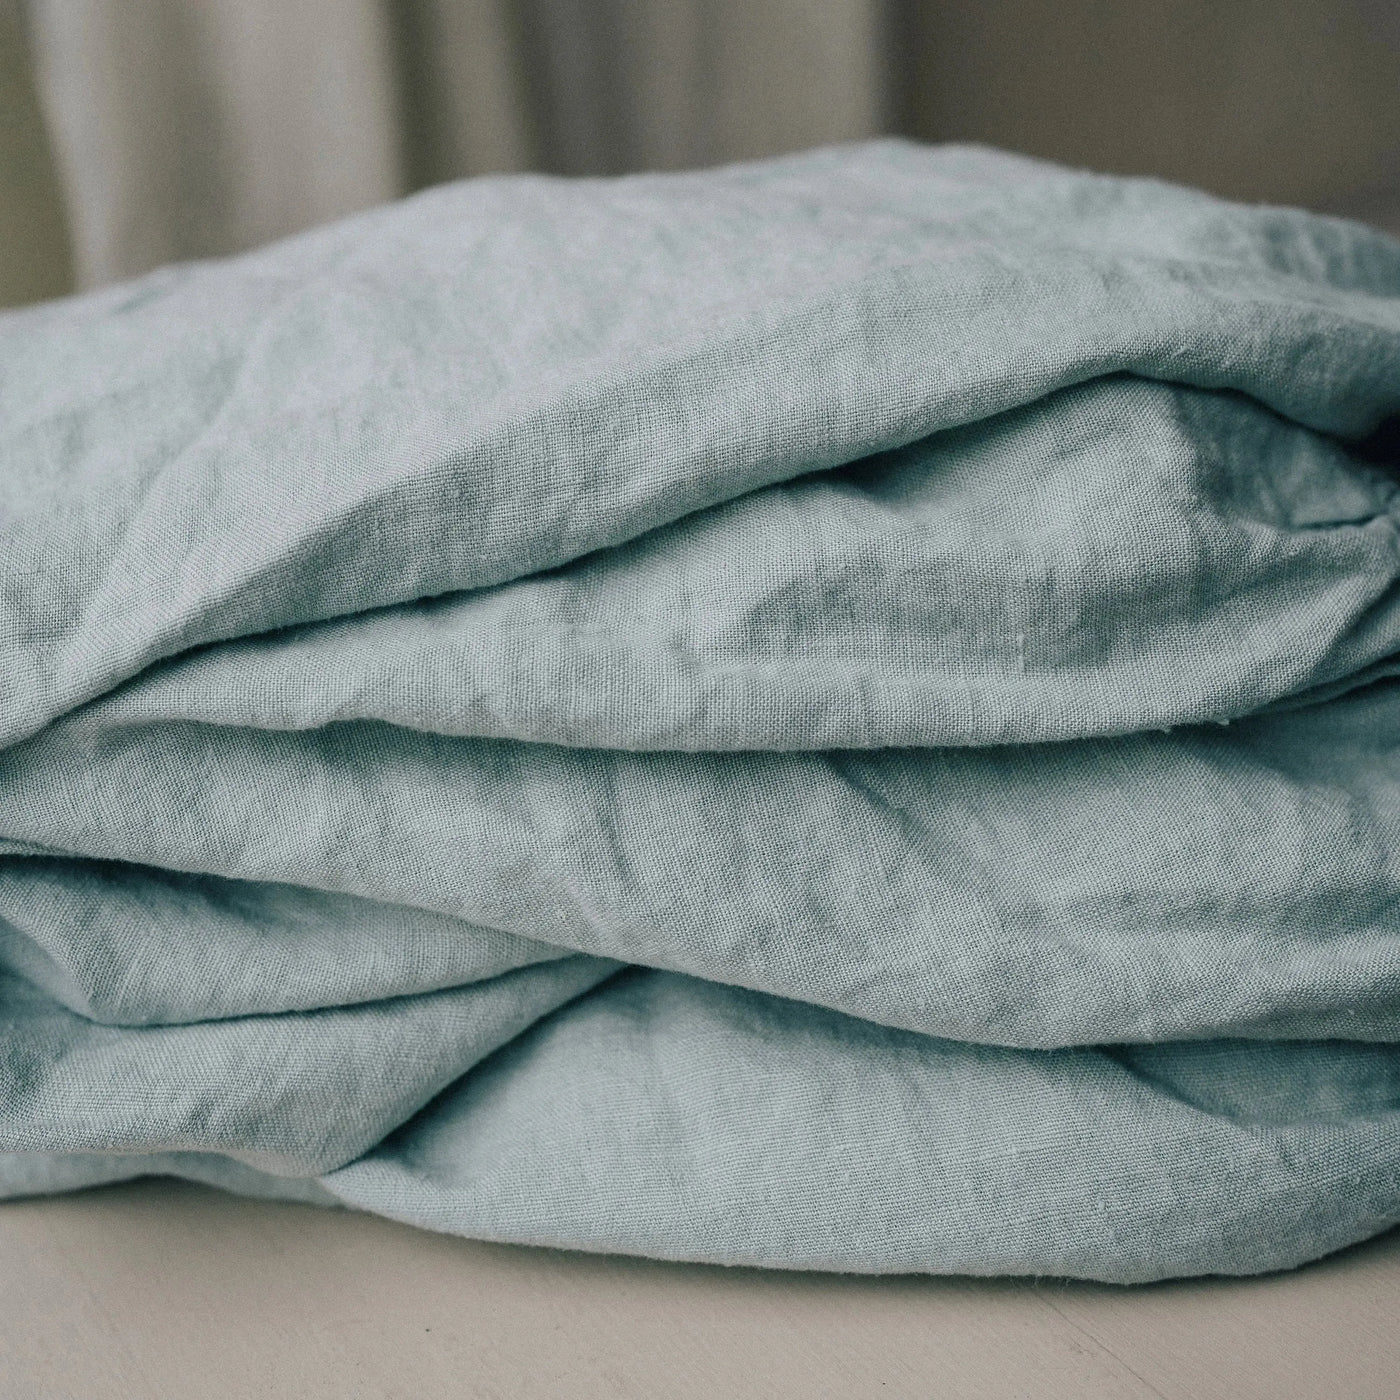 Buy online Gorgeous Linen Bedding Set 200x200 in Mint Green 7